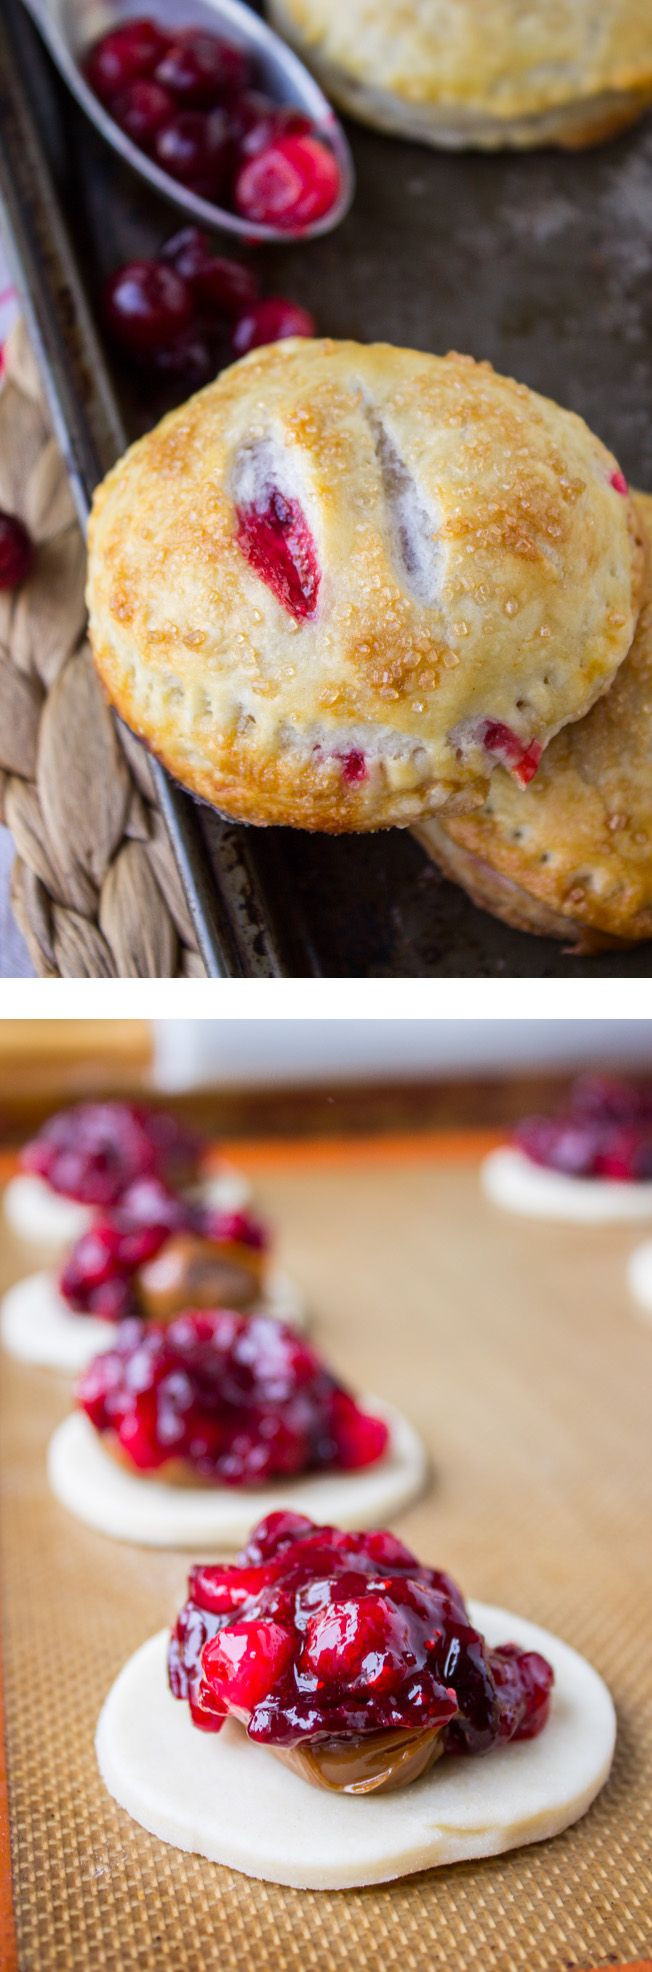 Cranberry Desserts For Thanksgiving
 Best 25 Cranberry pie ideas on Pinterest